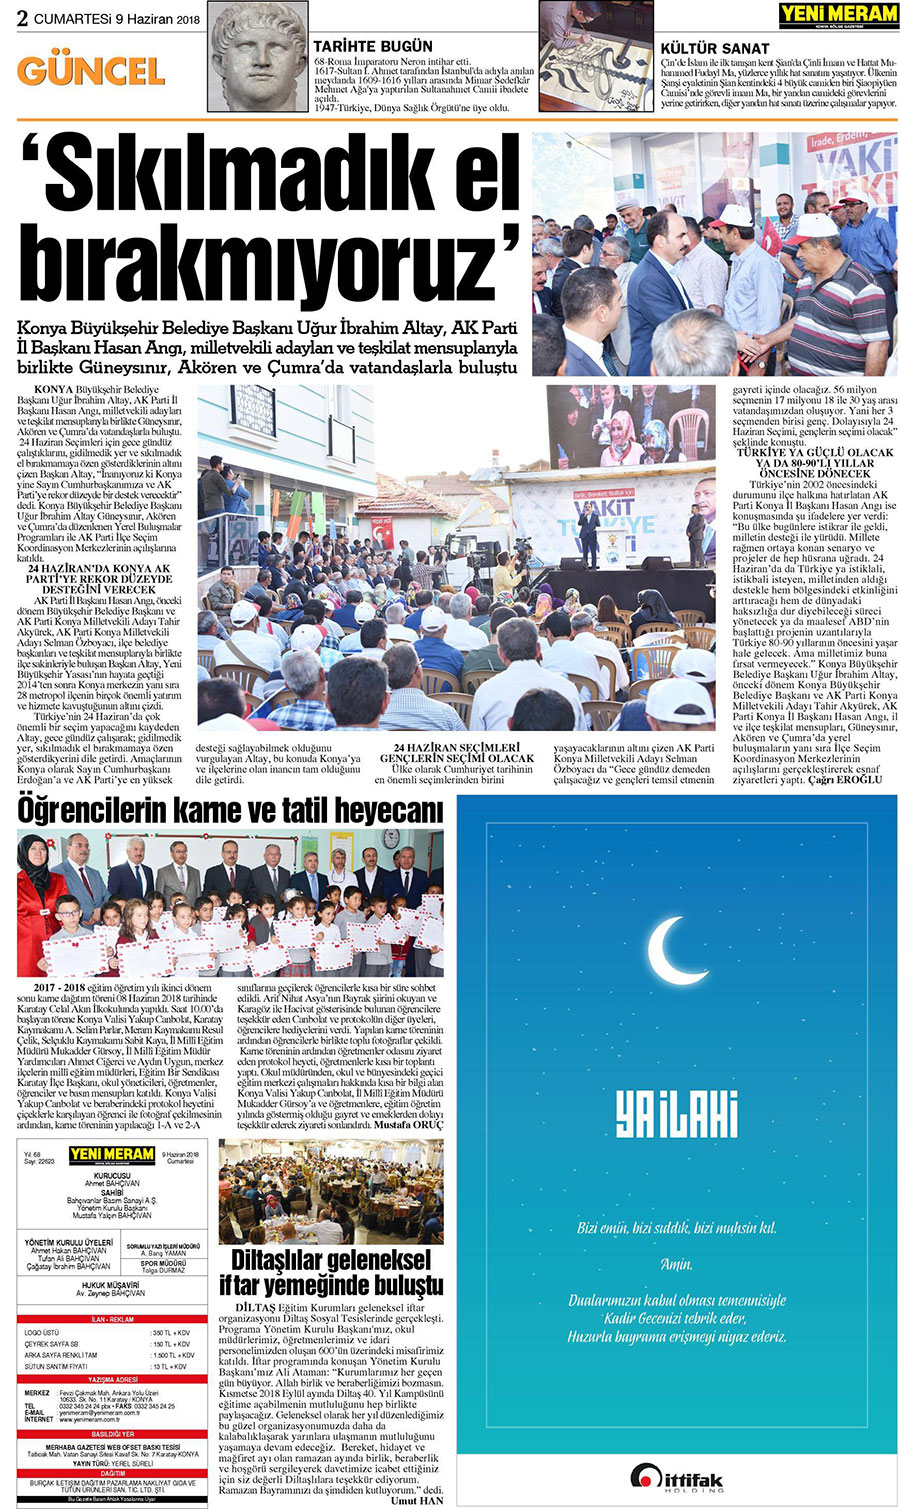 9 Haziran 2018 Yeni Meram Gazetesi